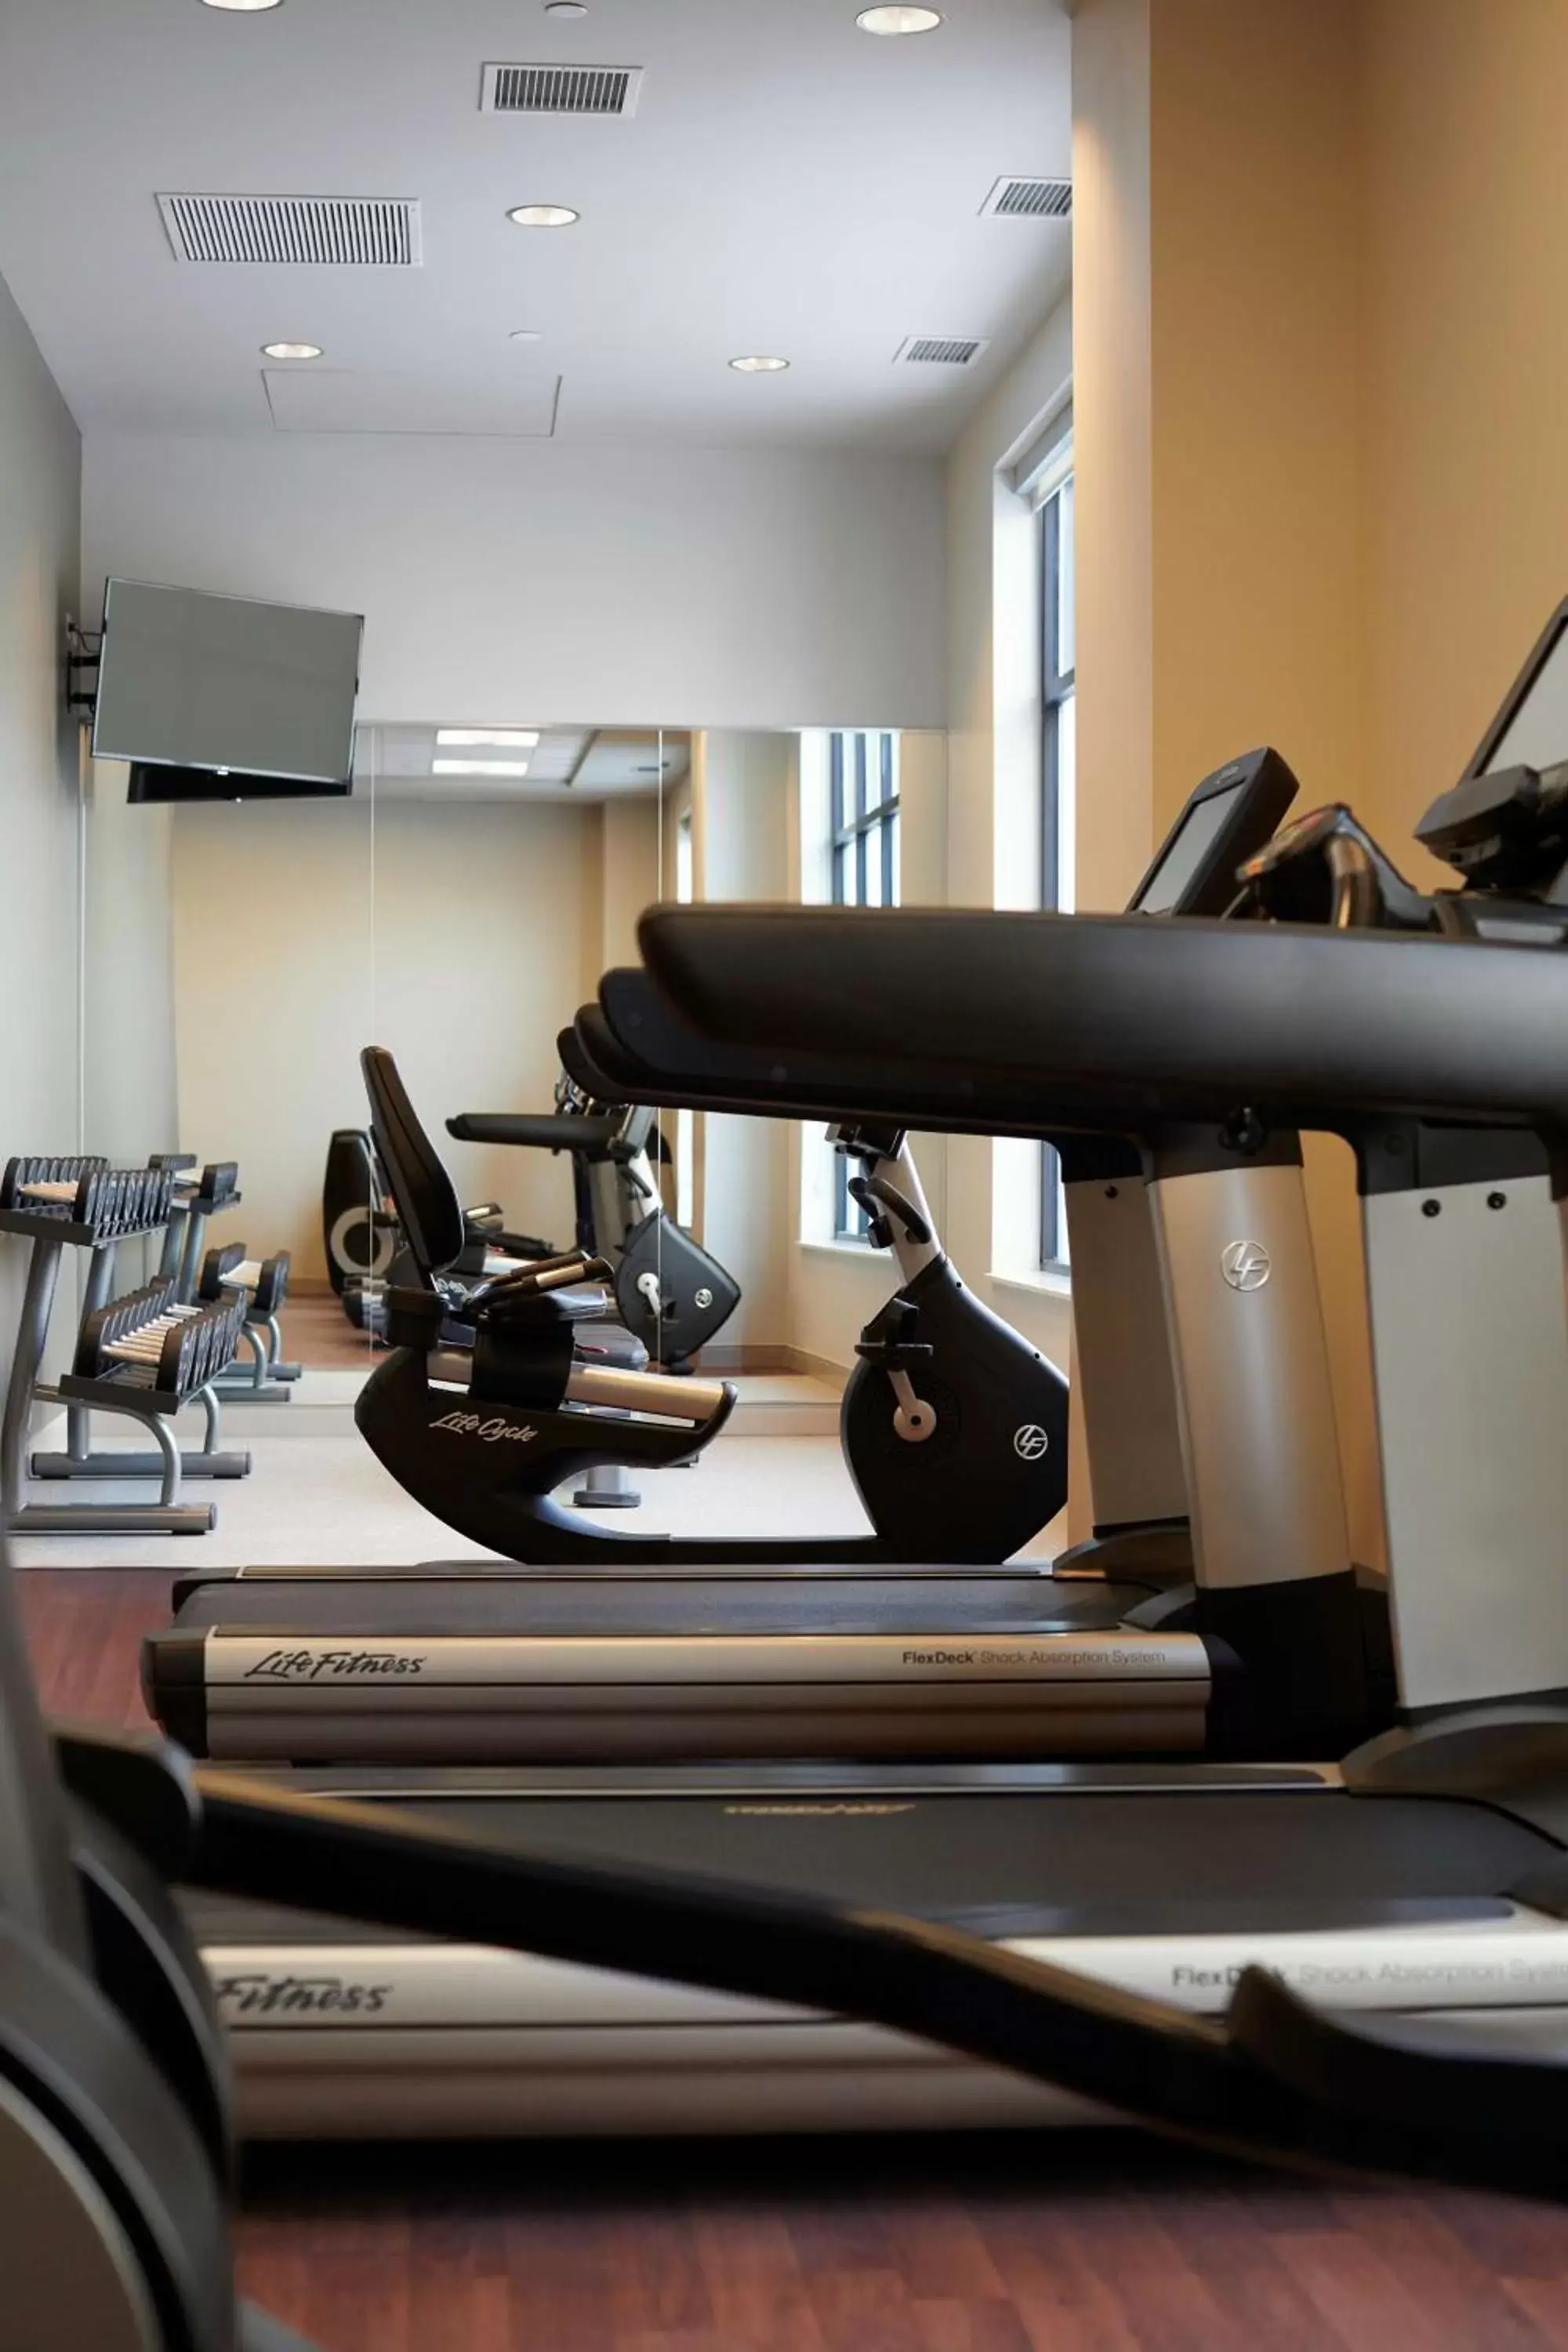 Fitness centre/facilities, Fitness Center/Facilities in Hilton Garden Inn Minneapolis - University Area